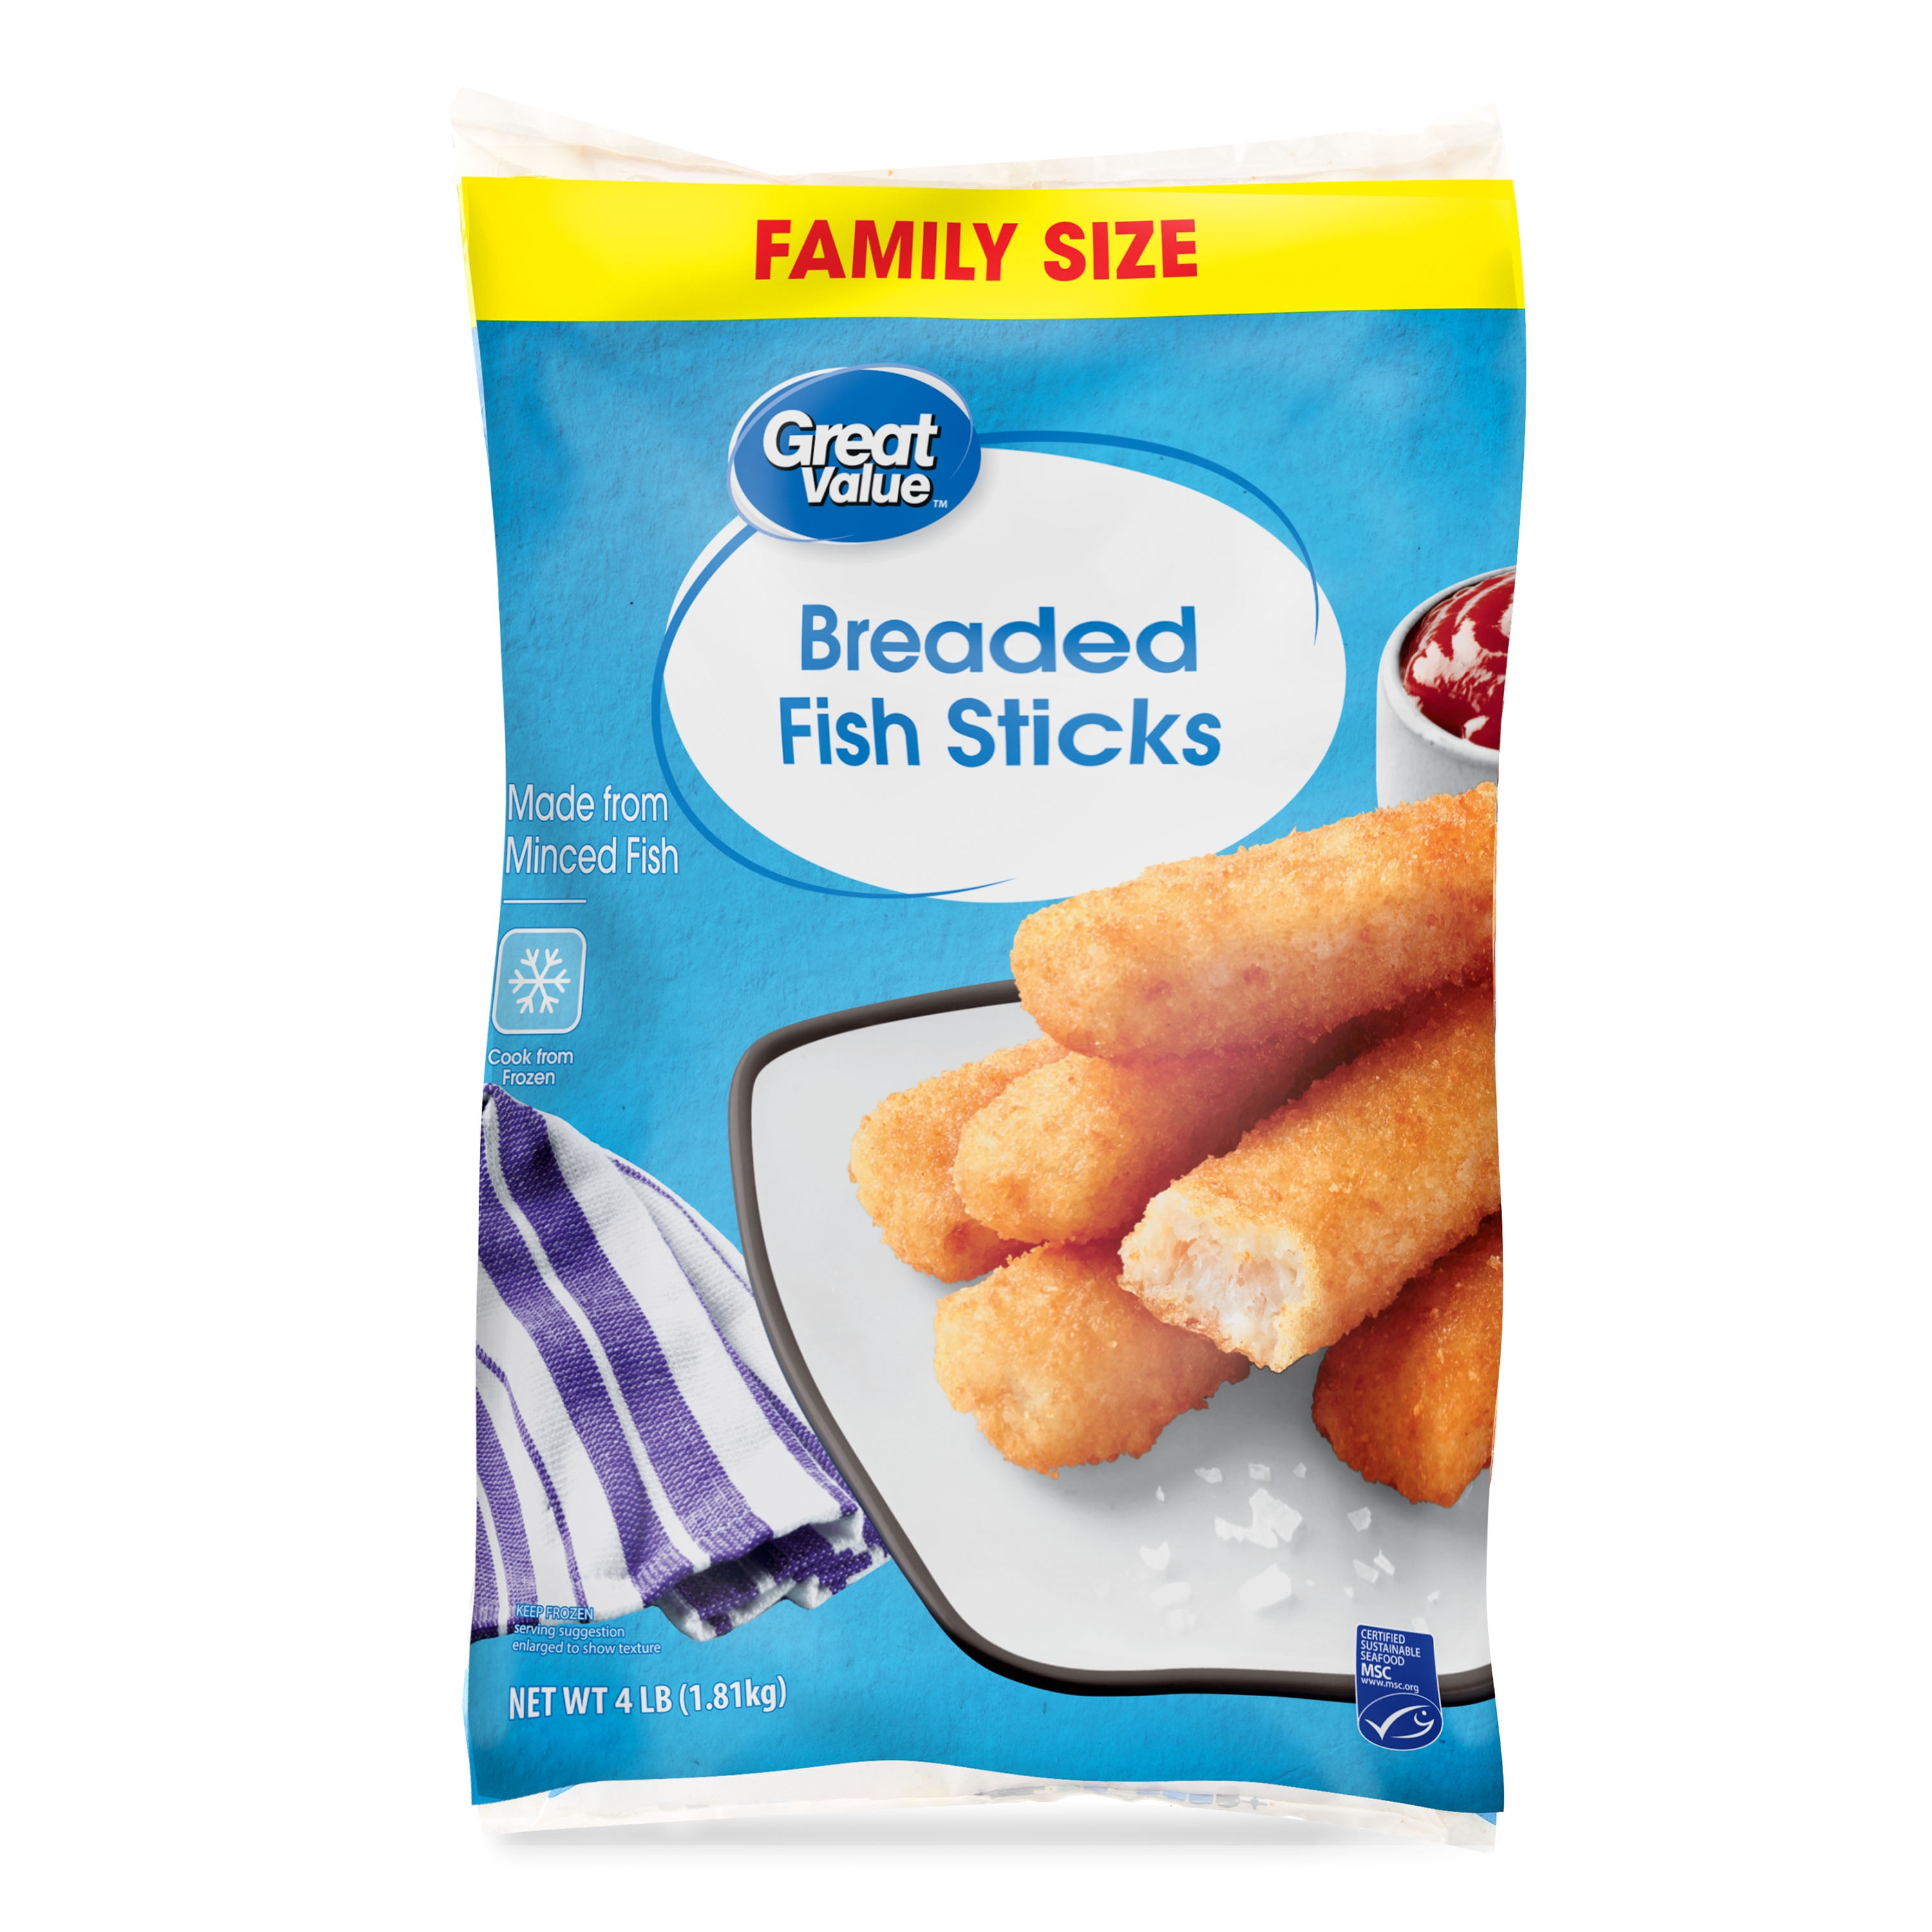 Great Value Breaded Fish Sticks, Family Size, 4 lb Bag (Frozen